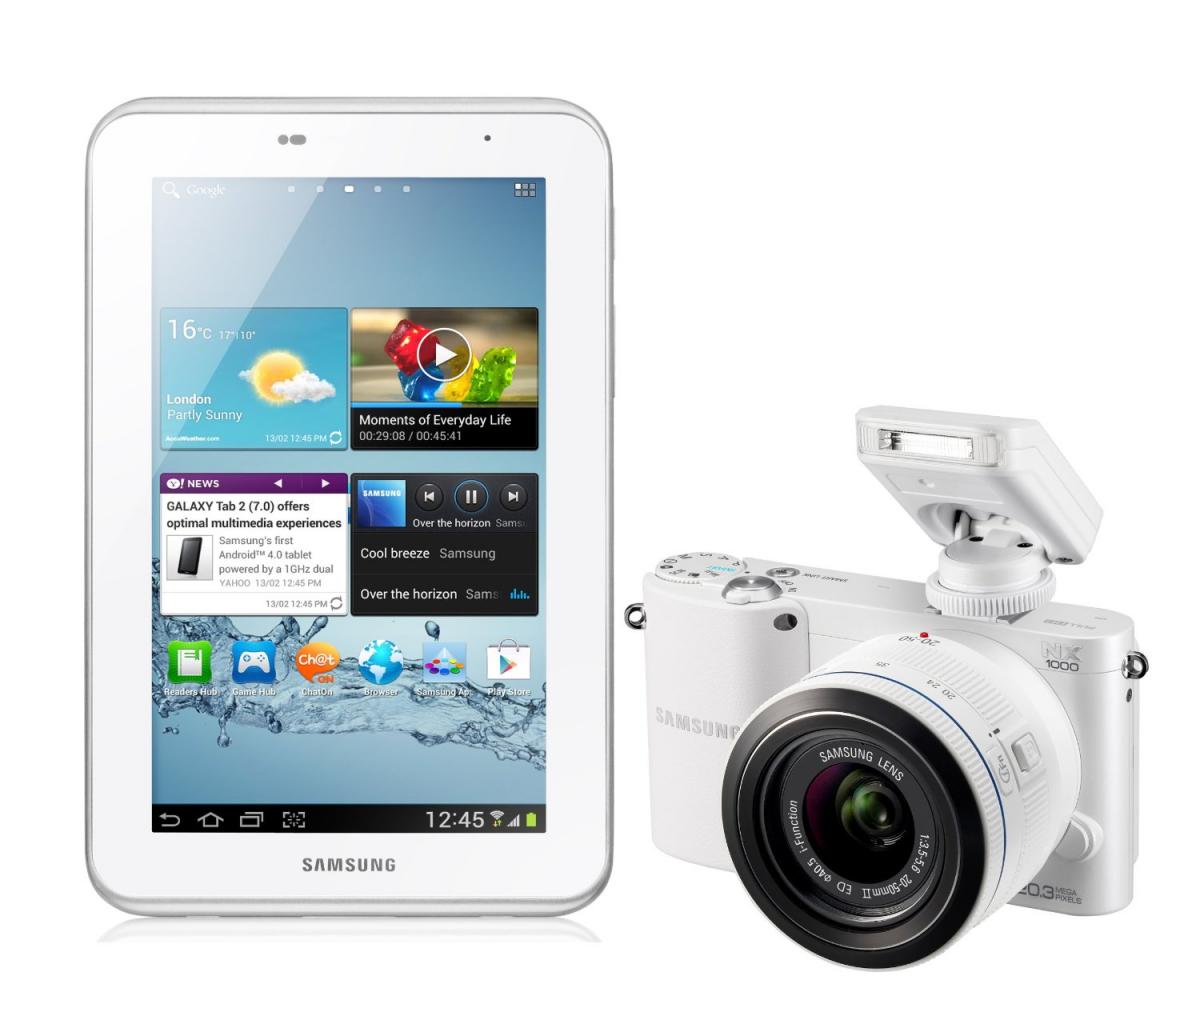 peak Indefinite fill in camera+tablet] Samsung NX1000 + Samsung 7.0 Galaxy Tab 2 White @amazon  300λιρες - Σελίδα 10 - Προσφορές - Insomnia.gr